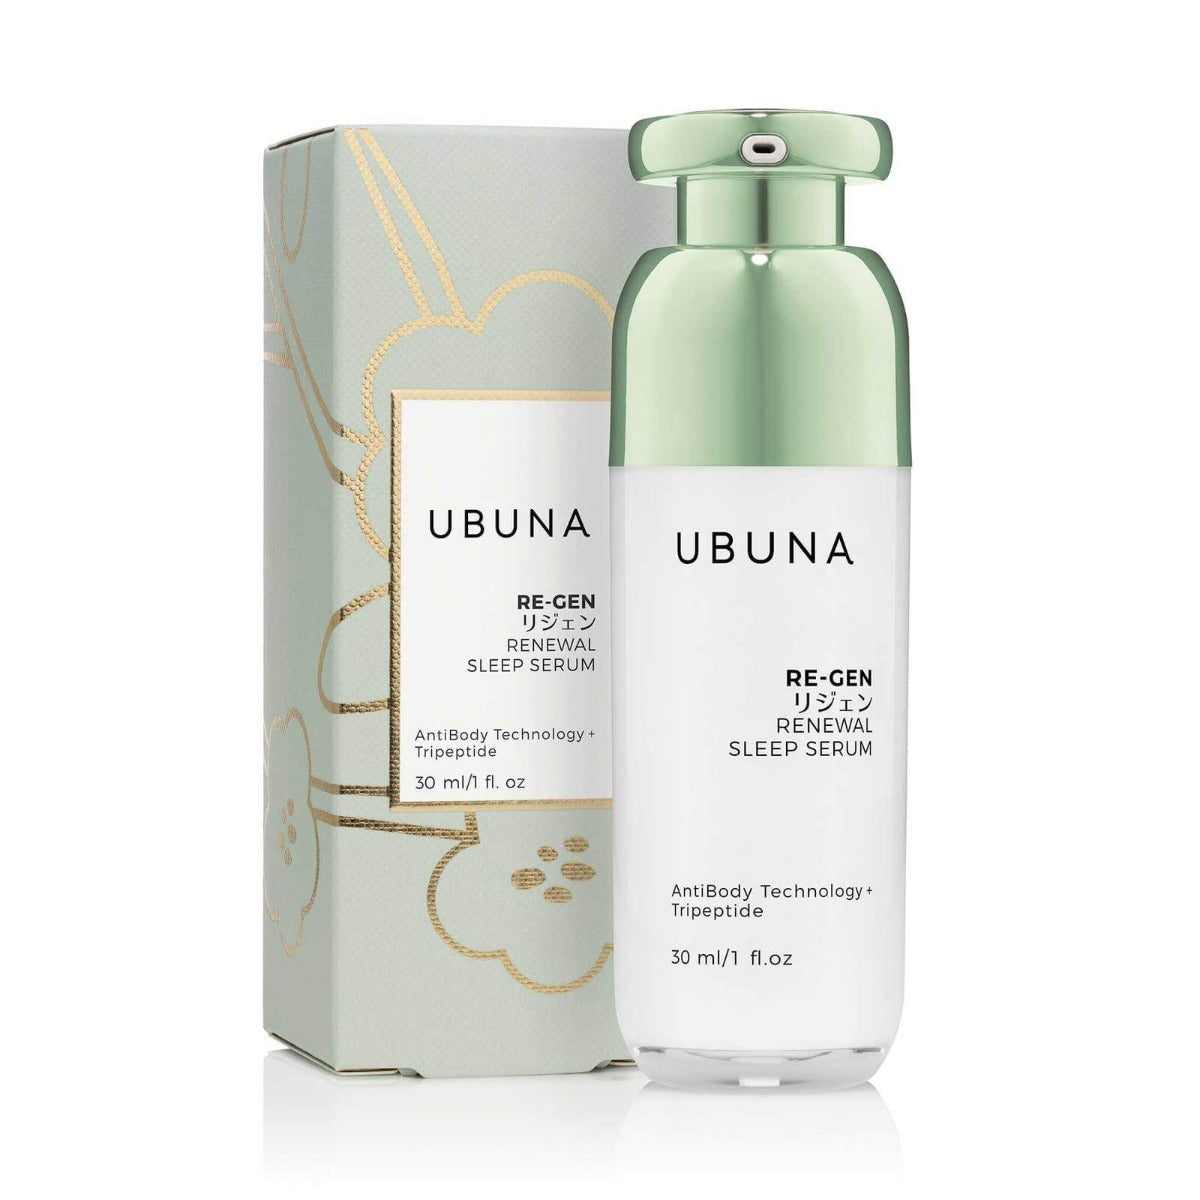 Ubuna Re-Gen Renewal Sleep Serum - 30ml